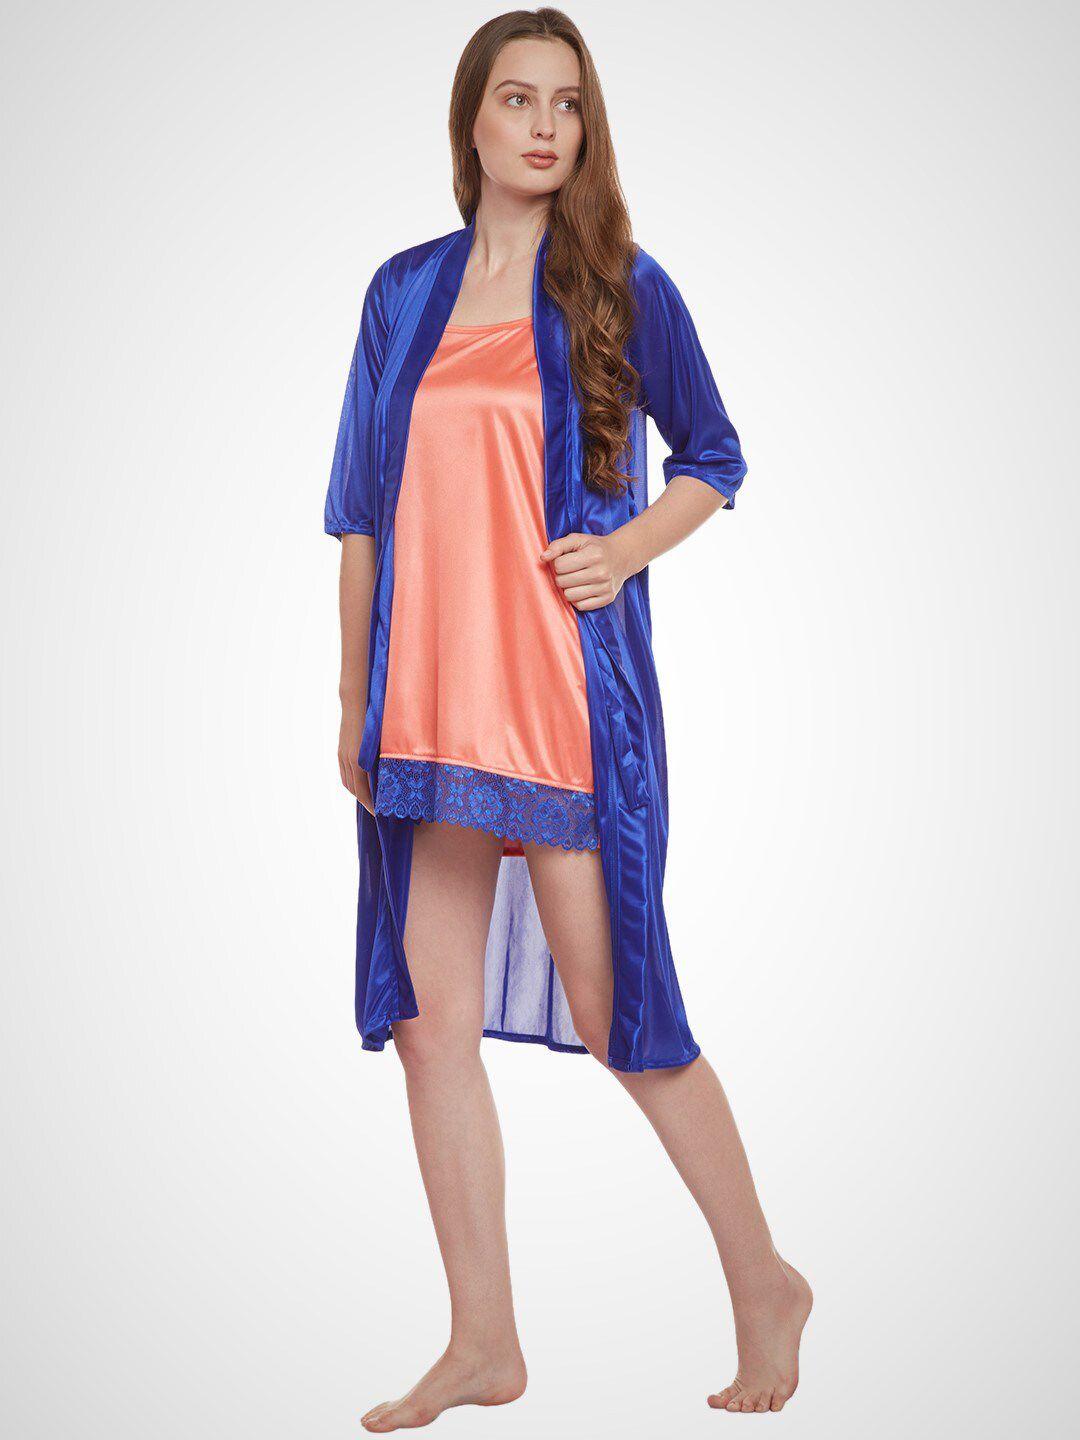 claura blue satin nightdress with robe